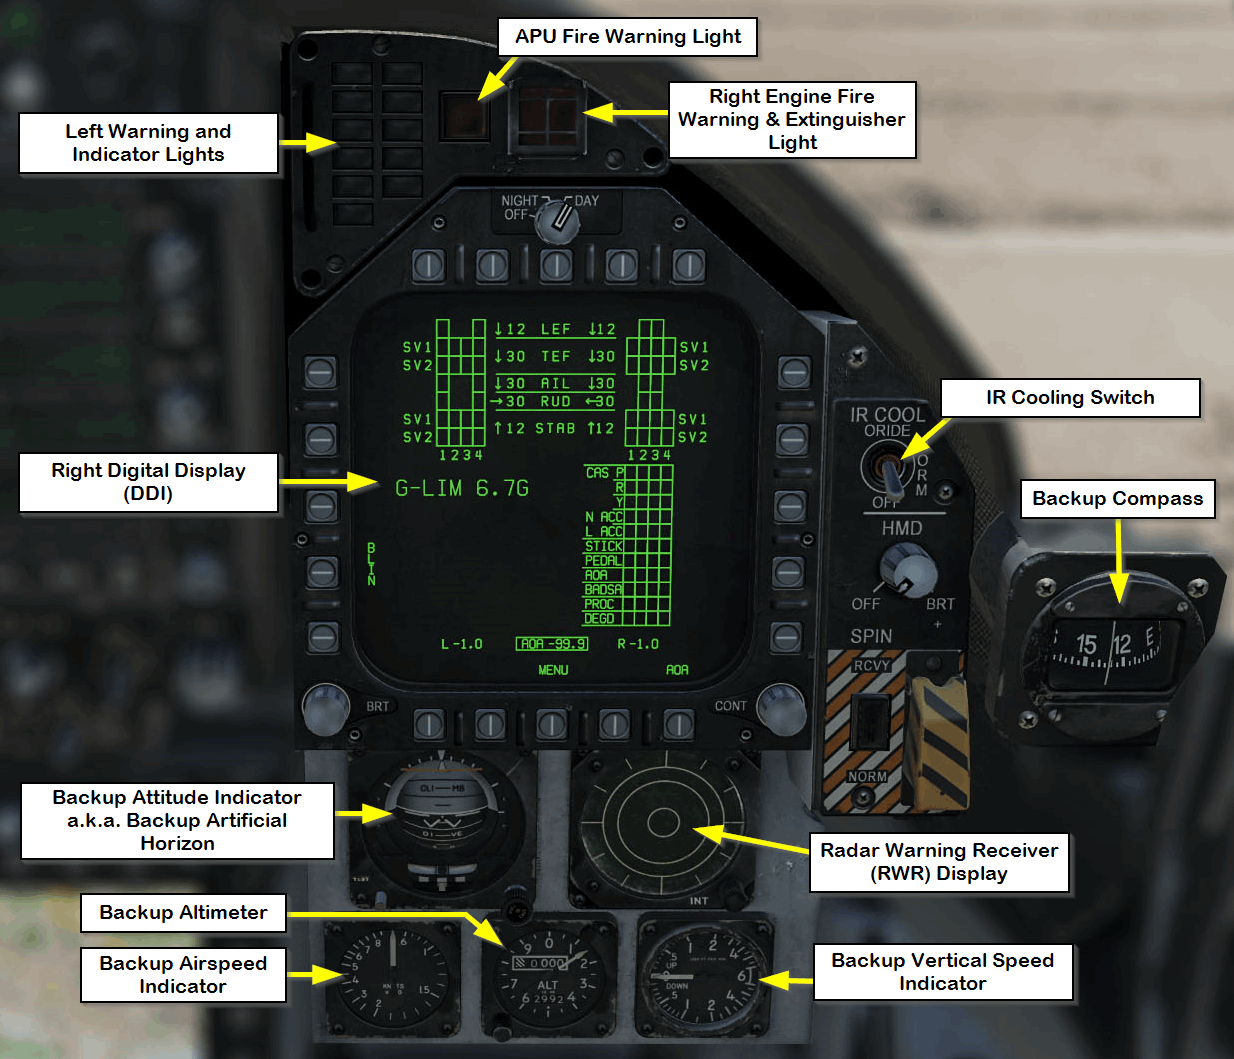 F/A-18C Right Instrument Panel, Picture by kaltokri, Public Domain